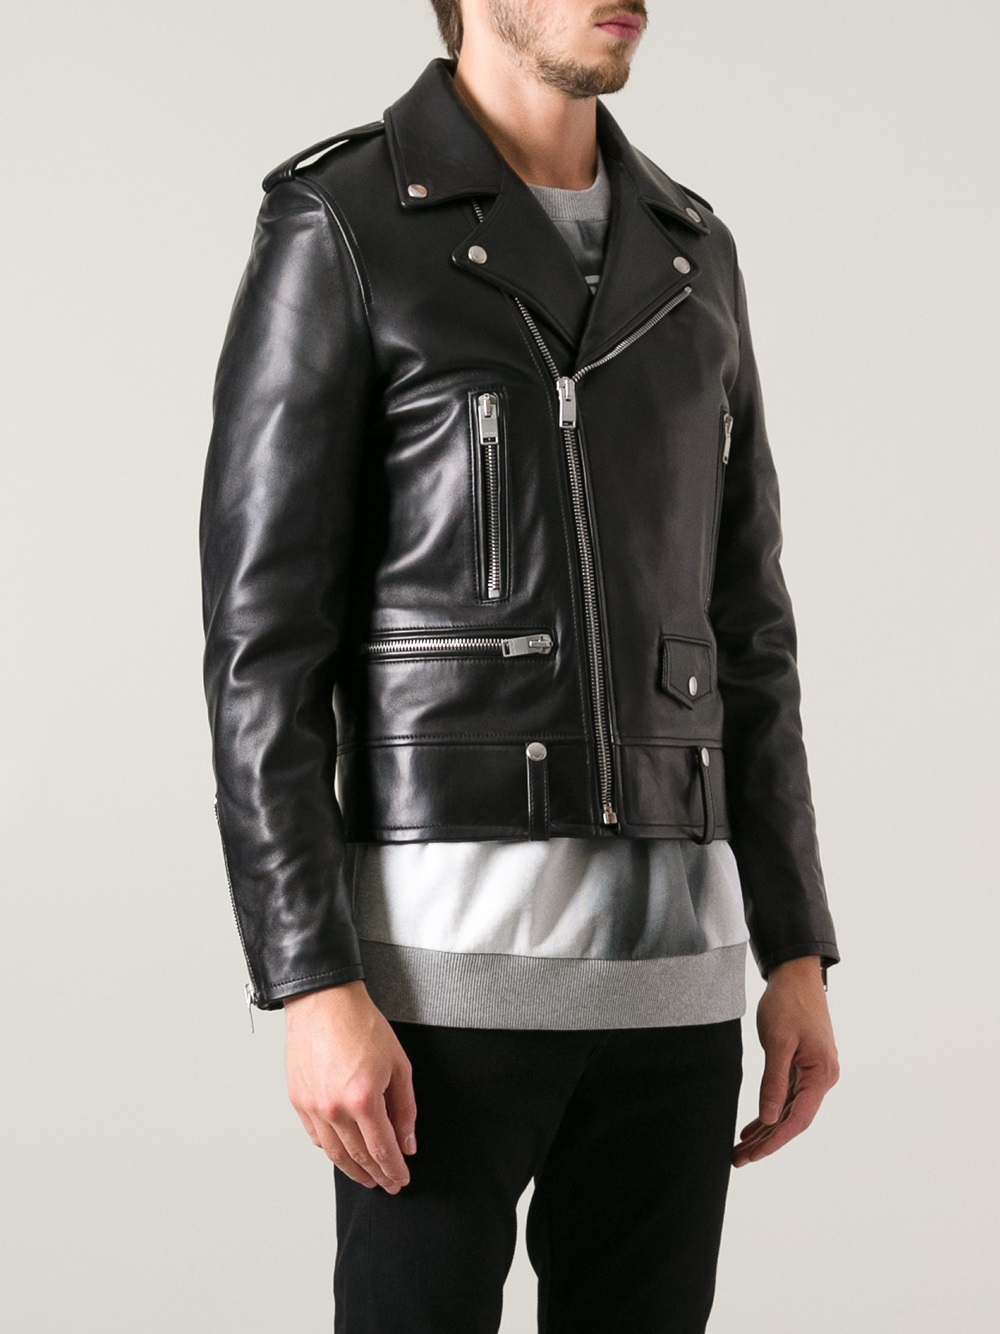 Lyst - Saint Laurent Slim Leather Jacket in Black for Men